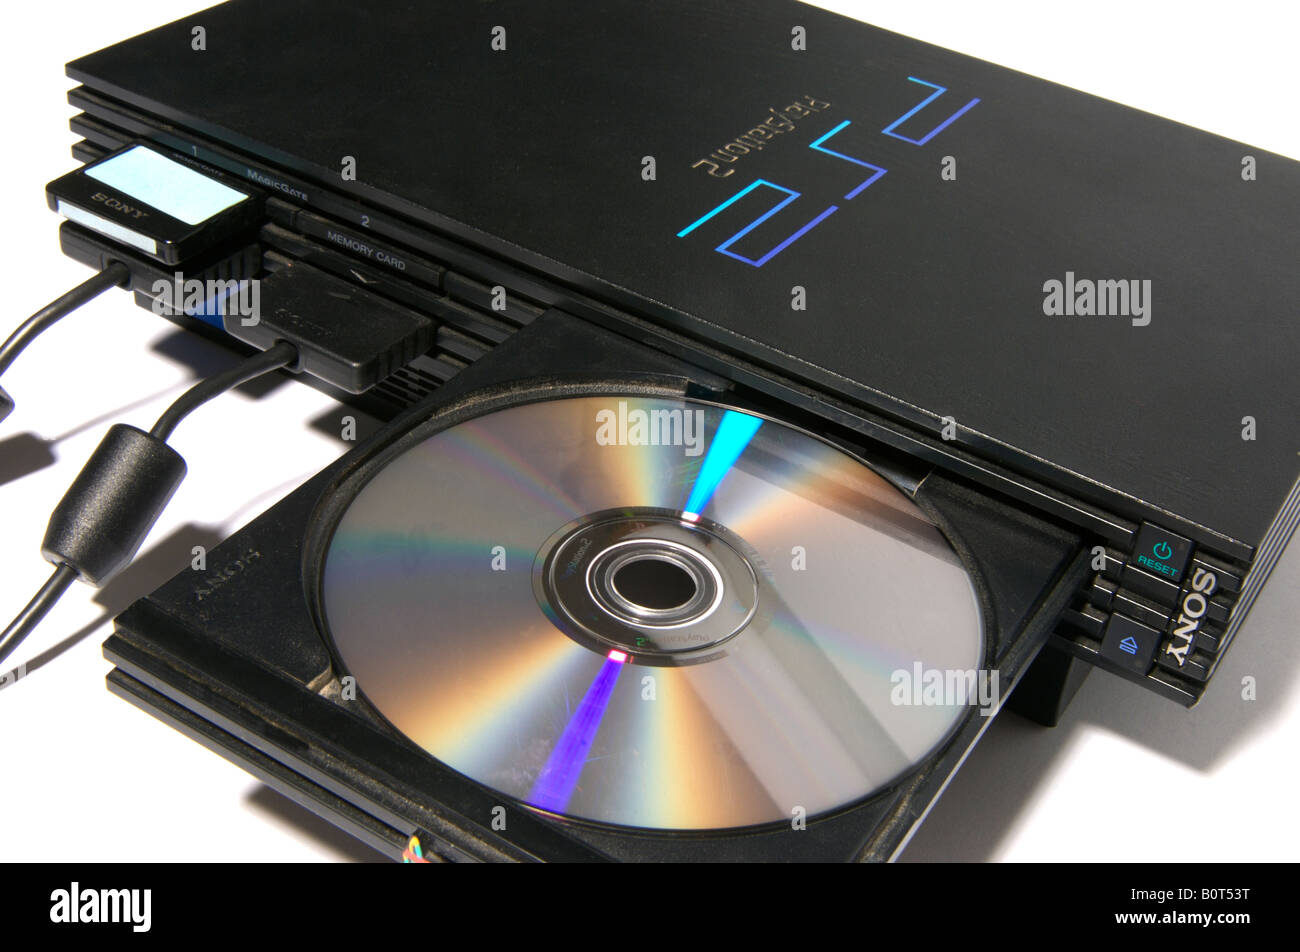 Sony Playstation 2, PS2 console Stock Photo